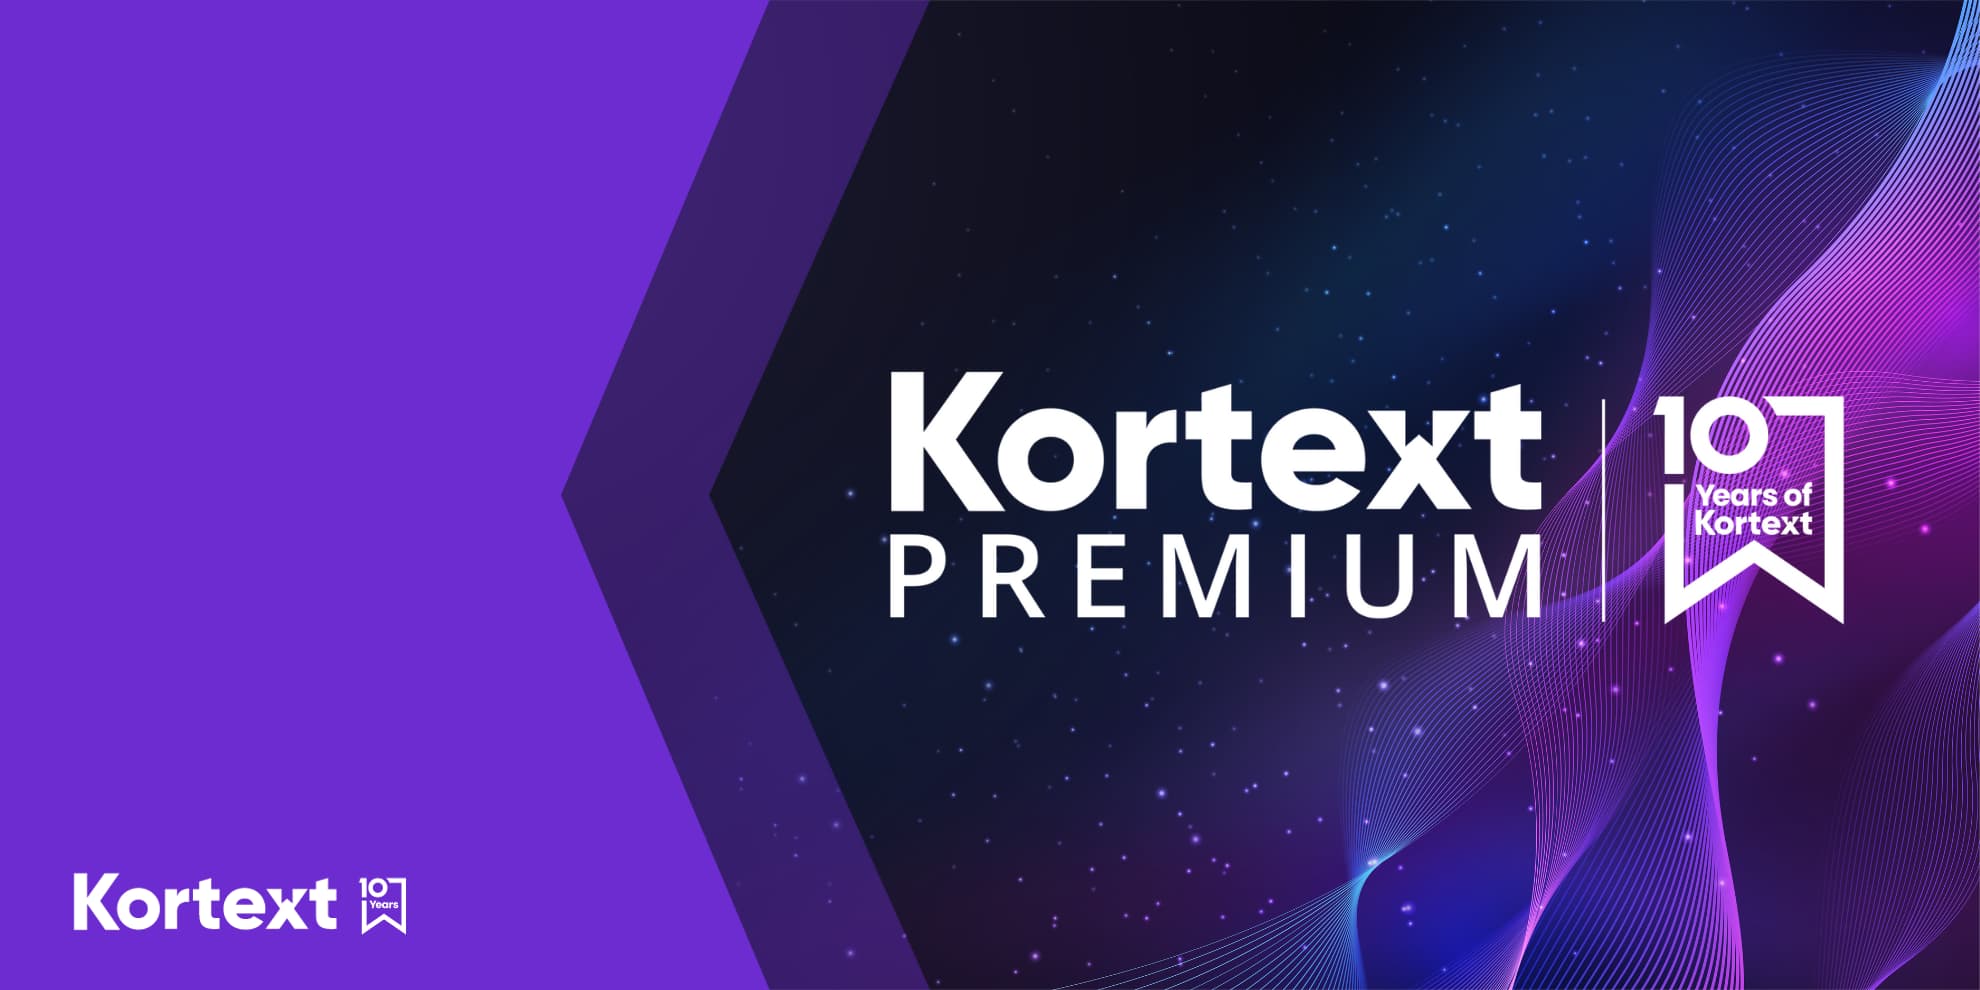 Kortext Premium Launches